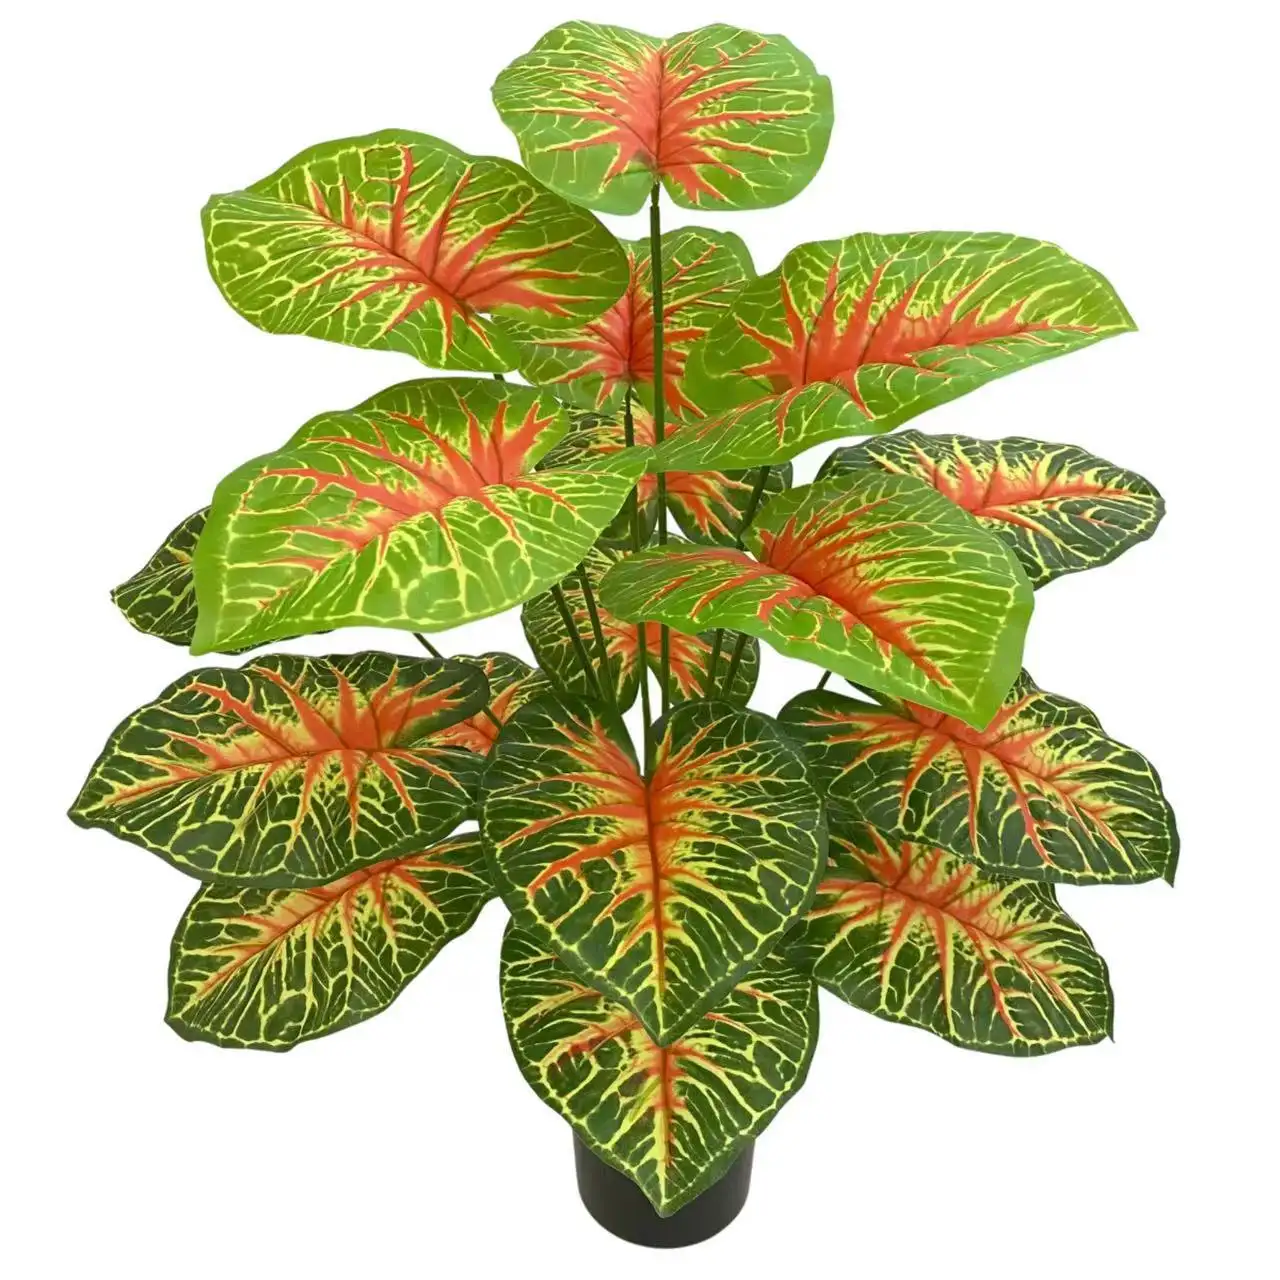 75cm 18 Heads Indoor Decorative Faux Plant Artificial Bonsai Small Plants Big Leaves without pot